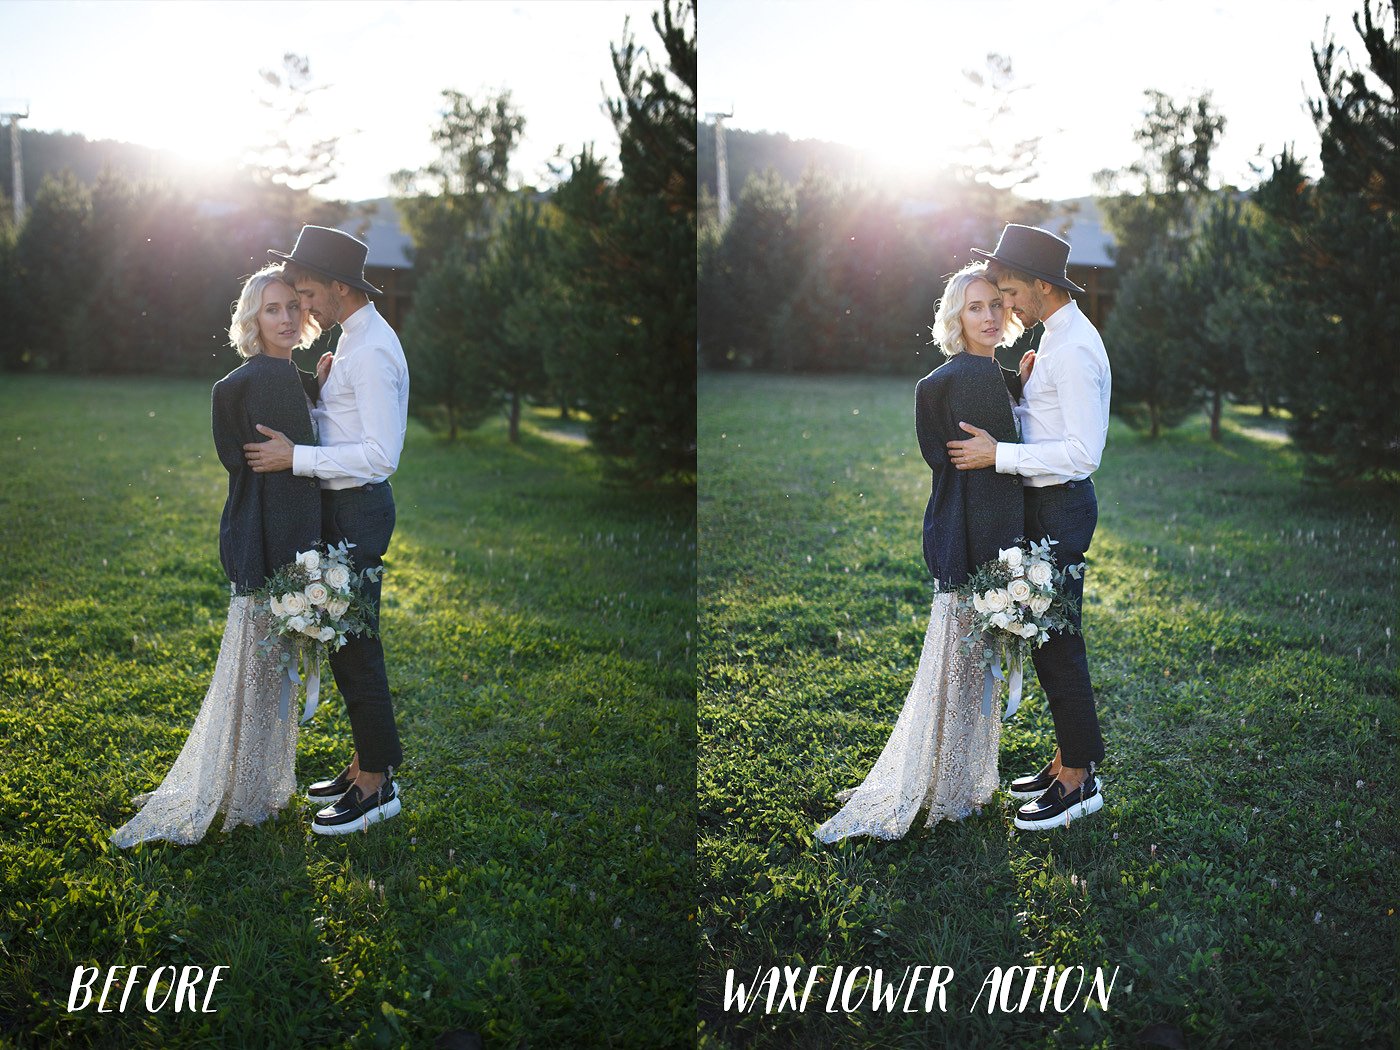 完美婚礼Photoshop动作 Photoshop Wedding Actions插图4